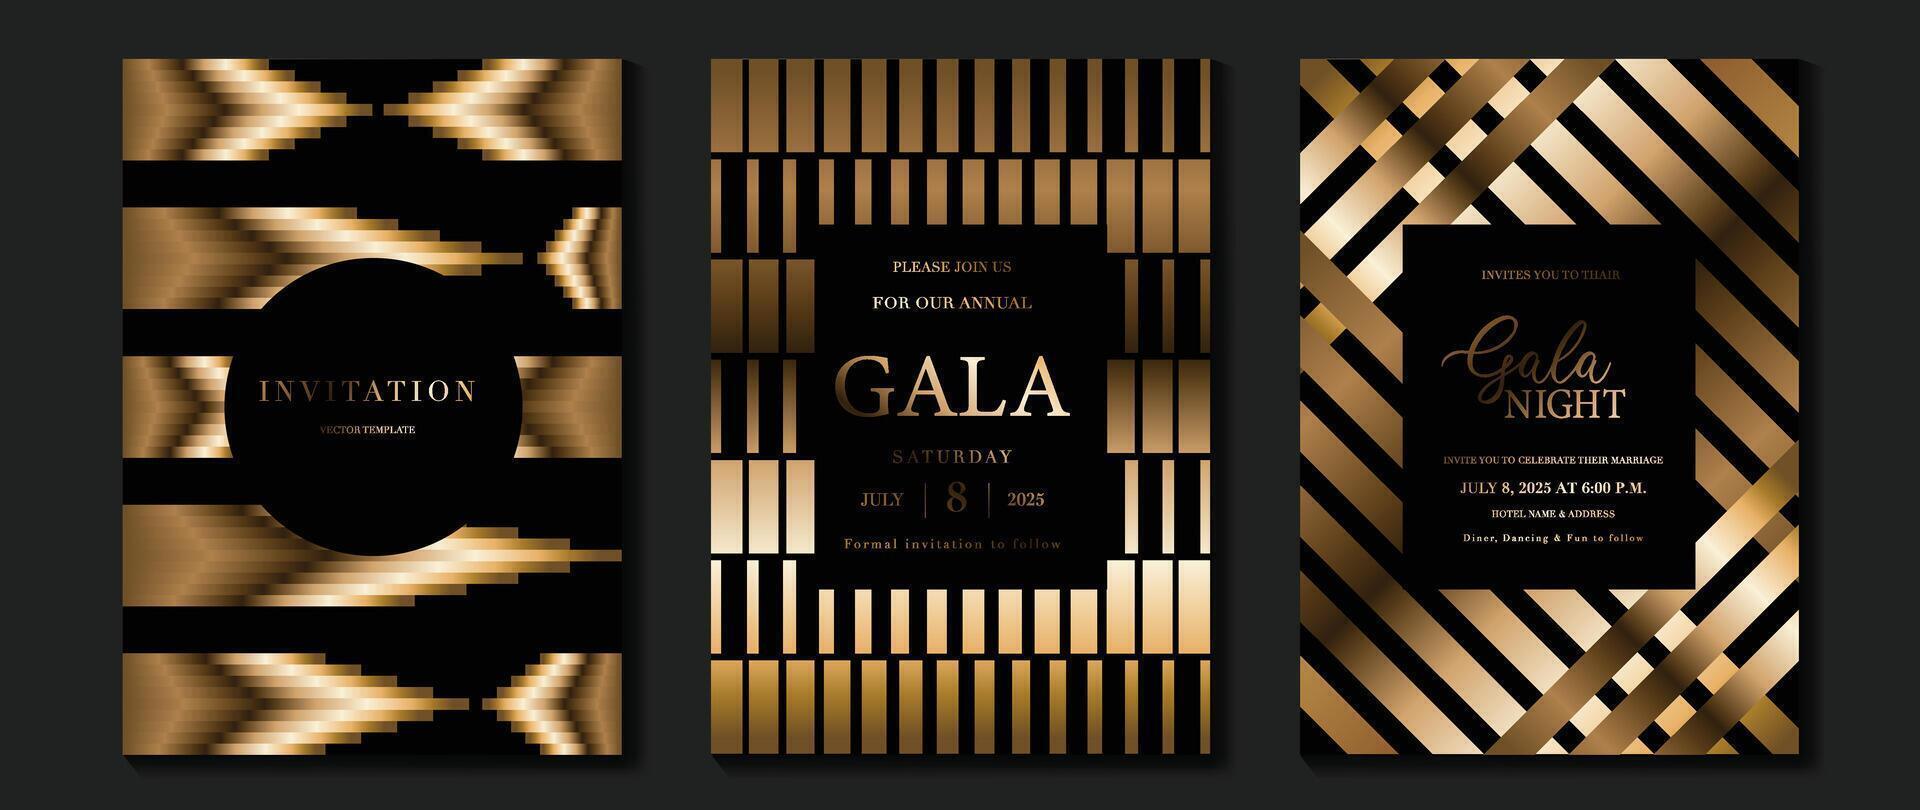 Luxury invitation card background . Golden elegant geometric shape, gold lines gradient on dark background. Premium design illustration for gala card, grand opening, wedding, party invitation. vector